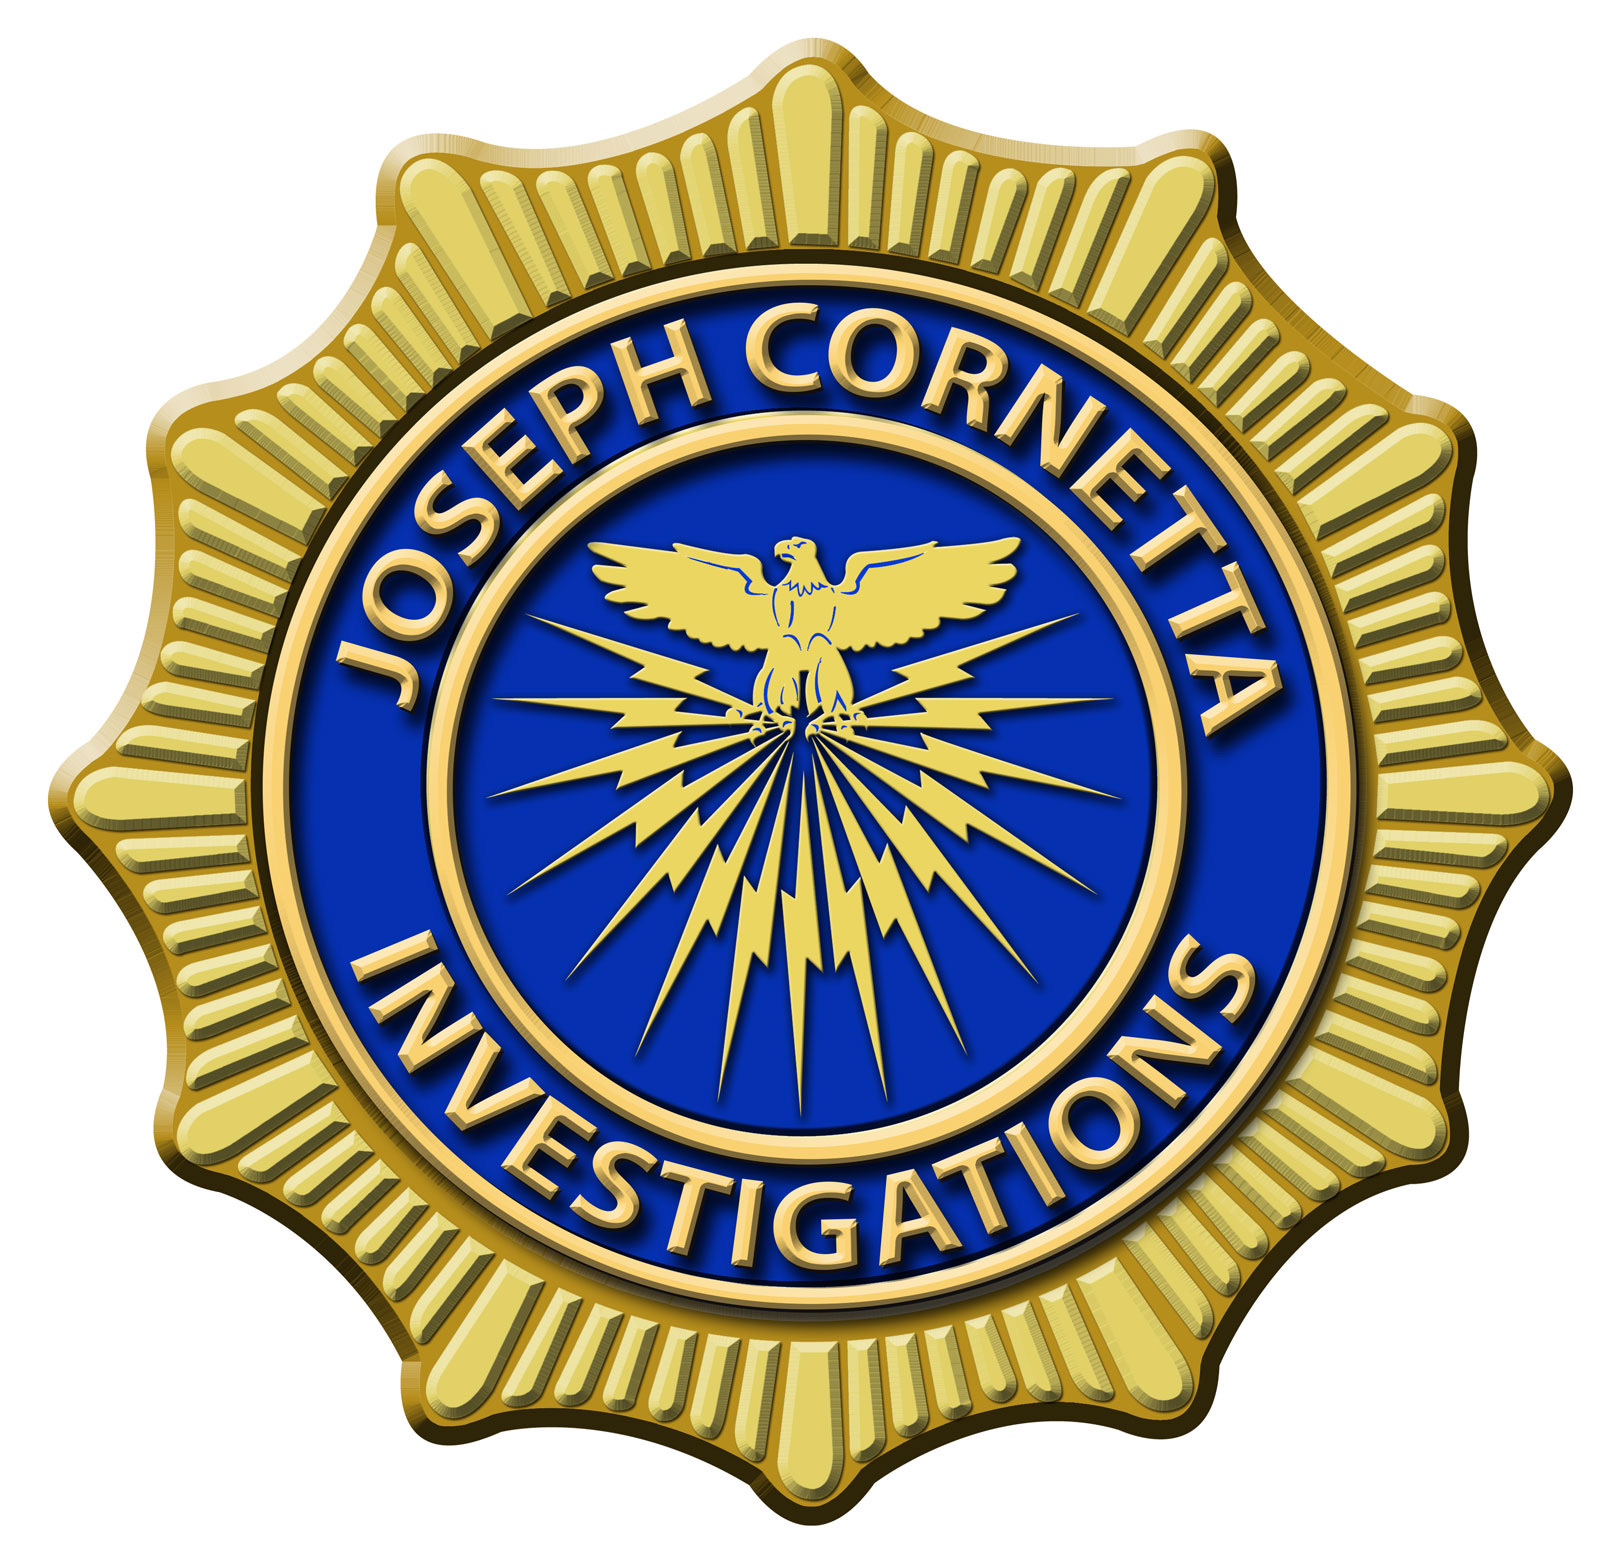 Joseph Cornetta Investigations 982 Montauk Hwy Suite 6, Bayport New York 11705